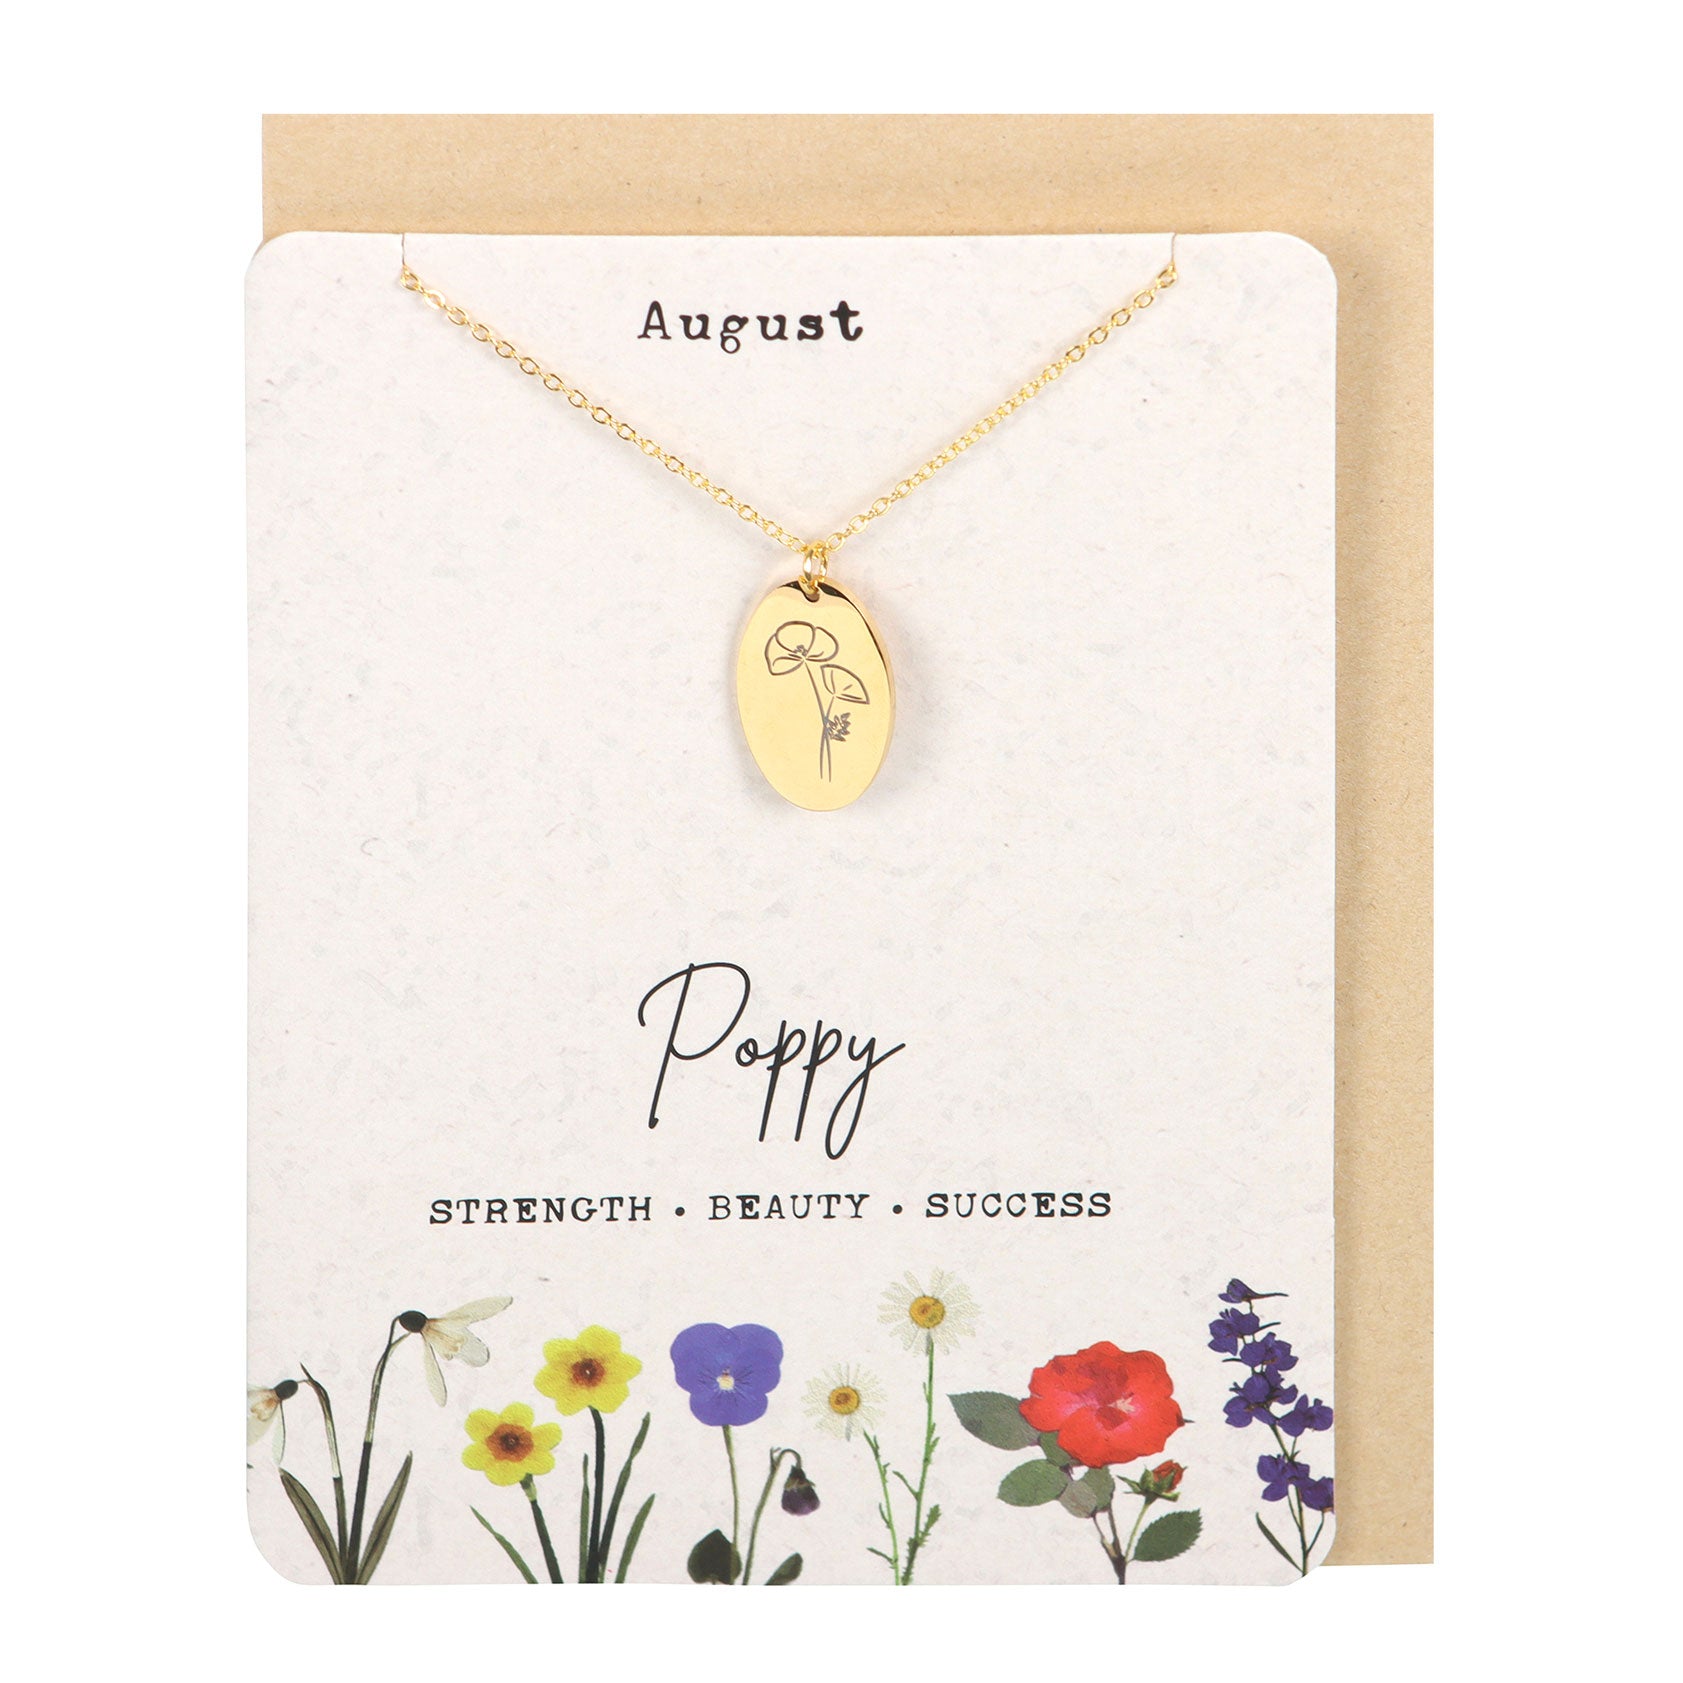 View August Poppy Birth Flower Necklace Card information